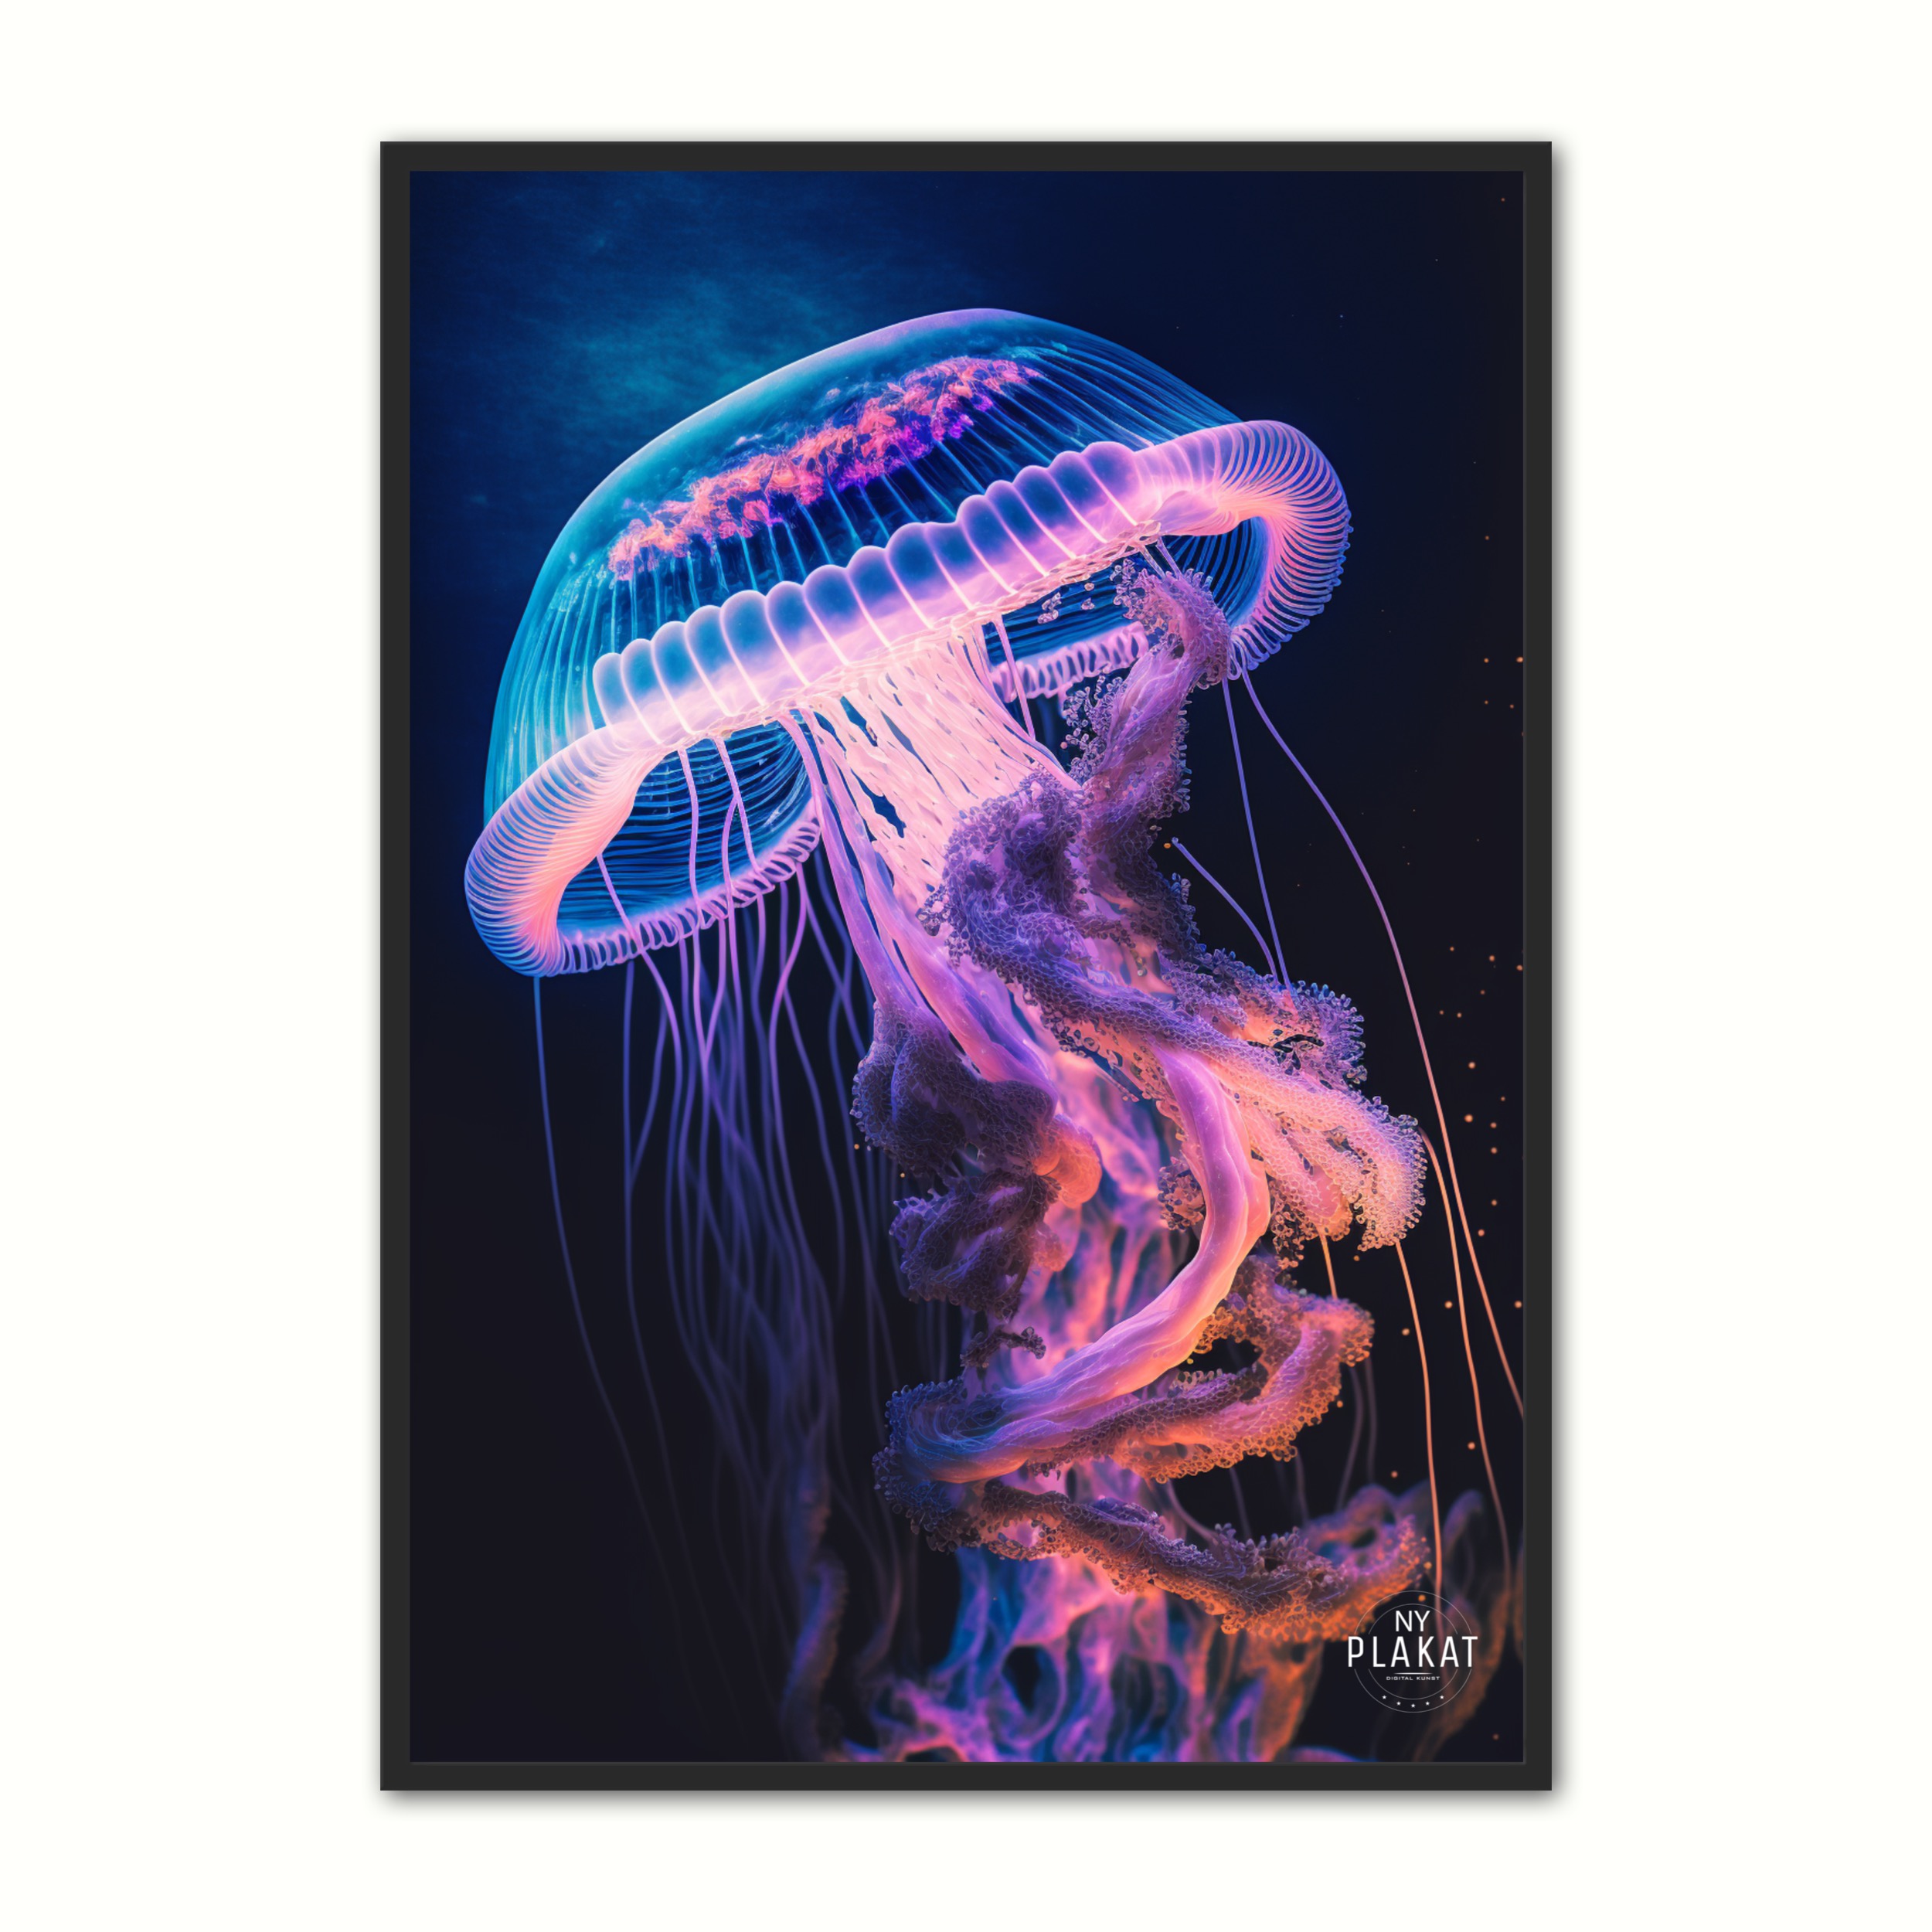 Se Jellyfish plakat No. 6 50 x 70 cm (B2) hos Nyplakat.dk